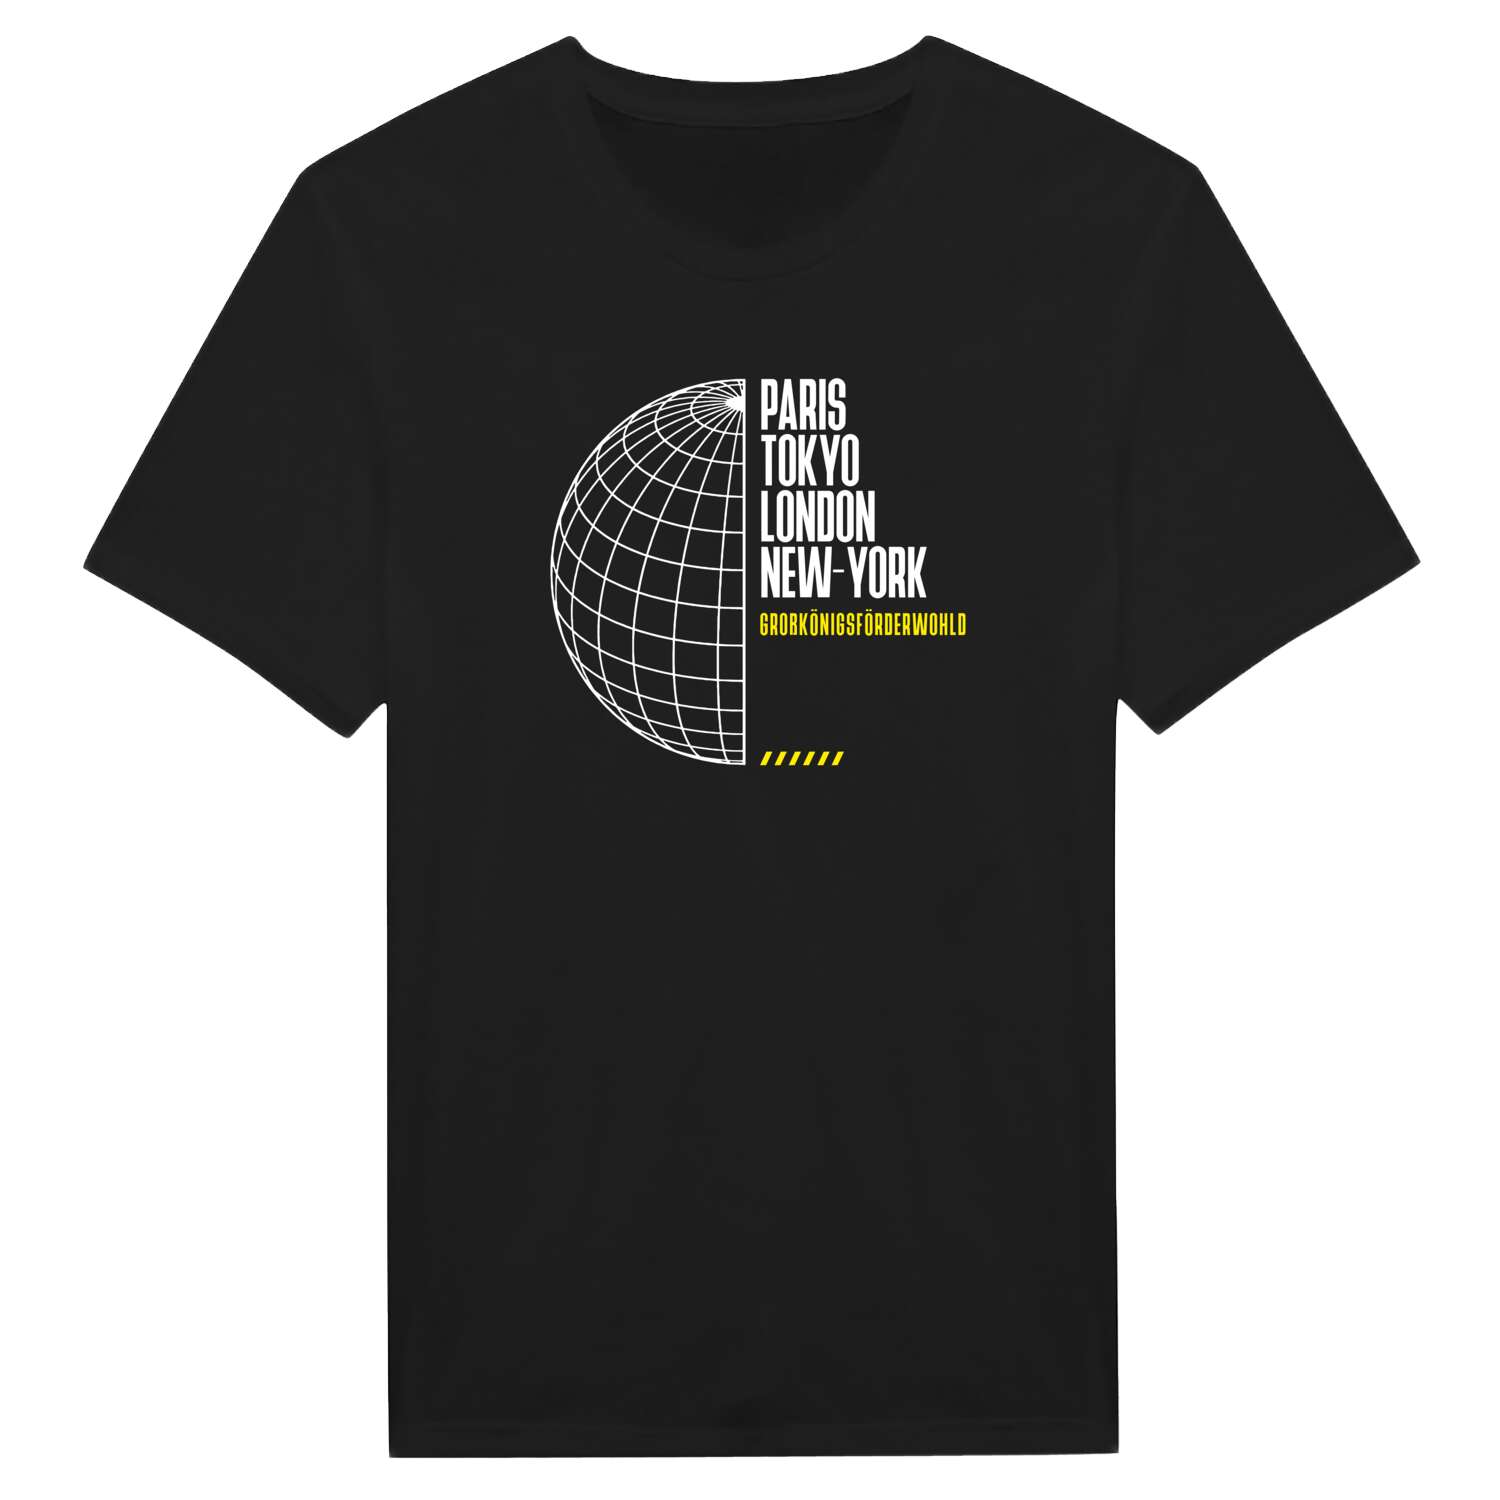 Großkönigsförderwohld T-Shirt »Paris Tokyo London«